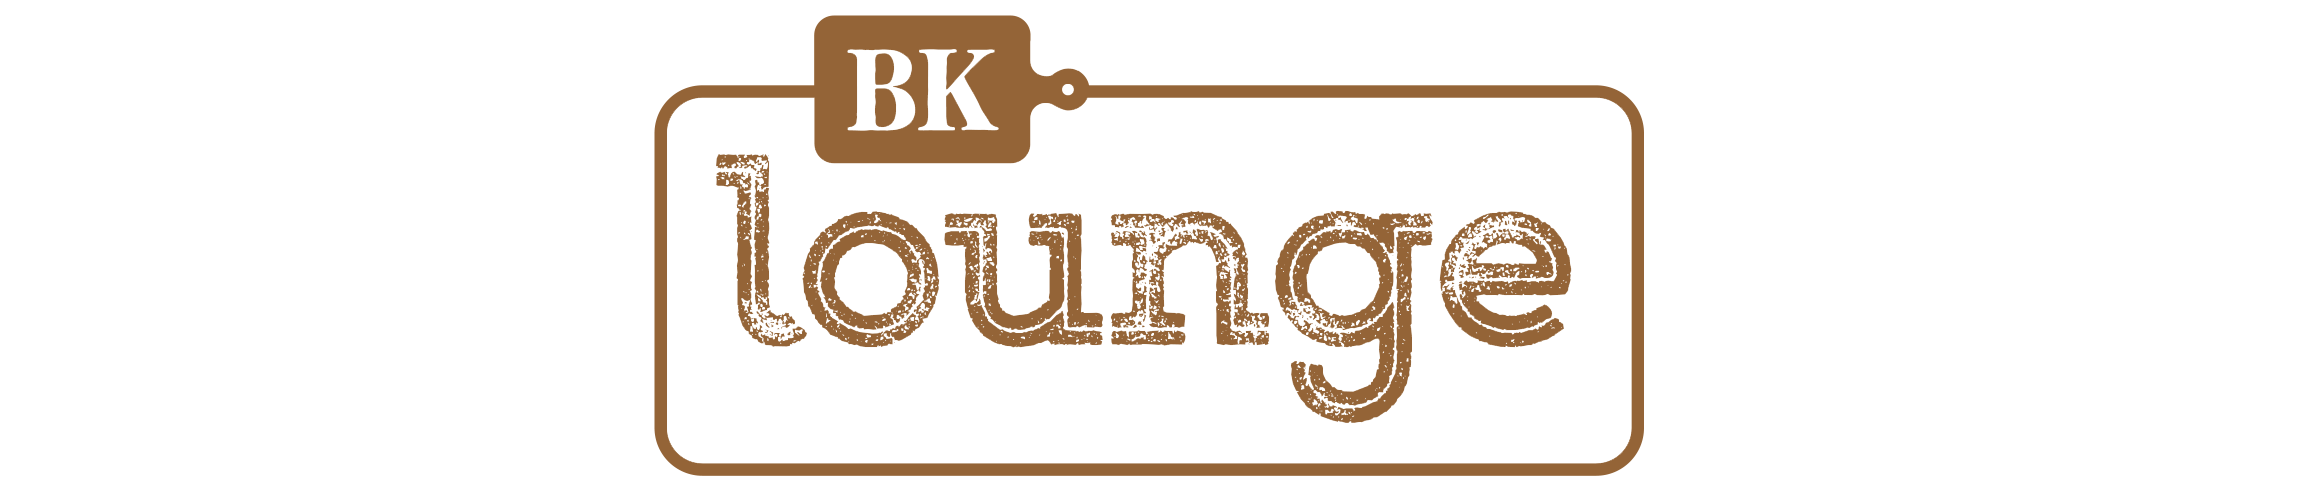 BK Lounge at Brook Kitchen, Budleigh